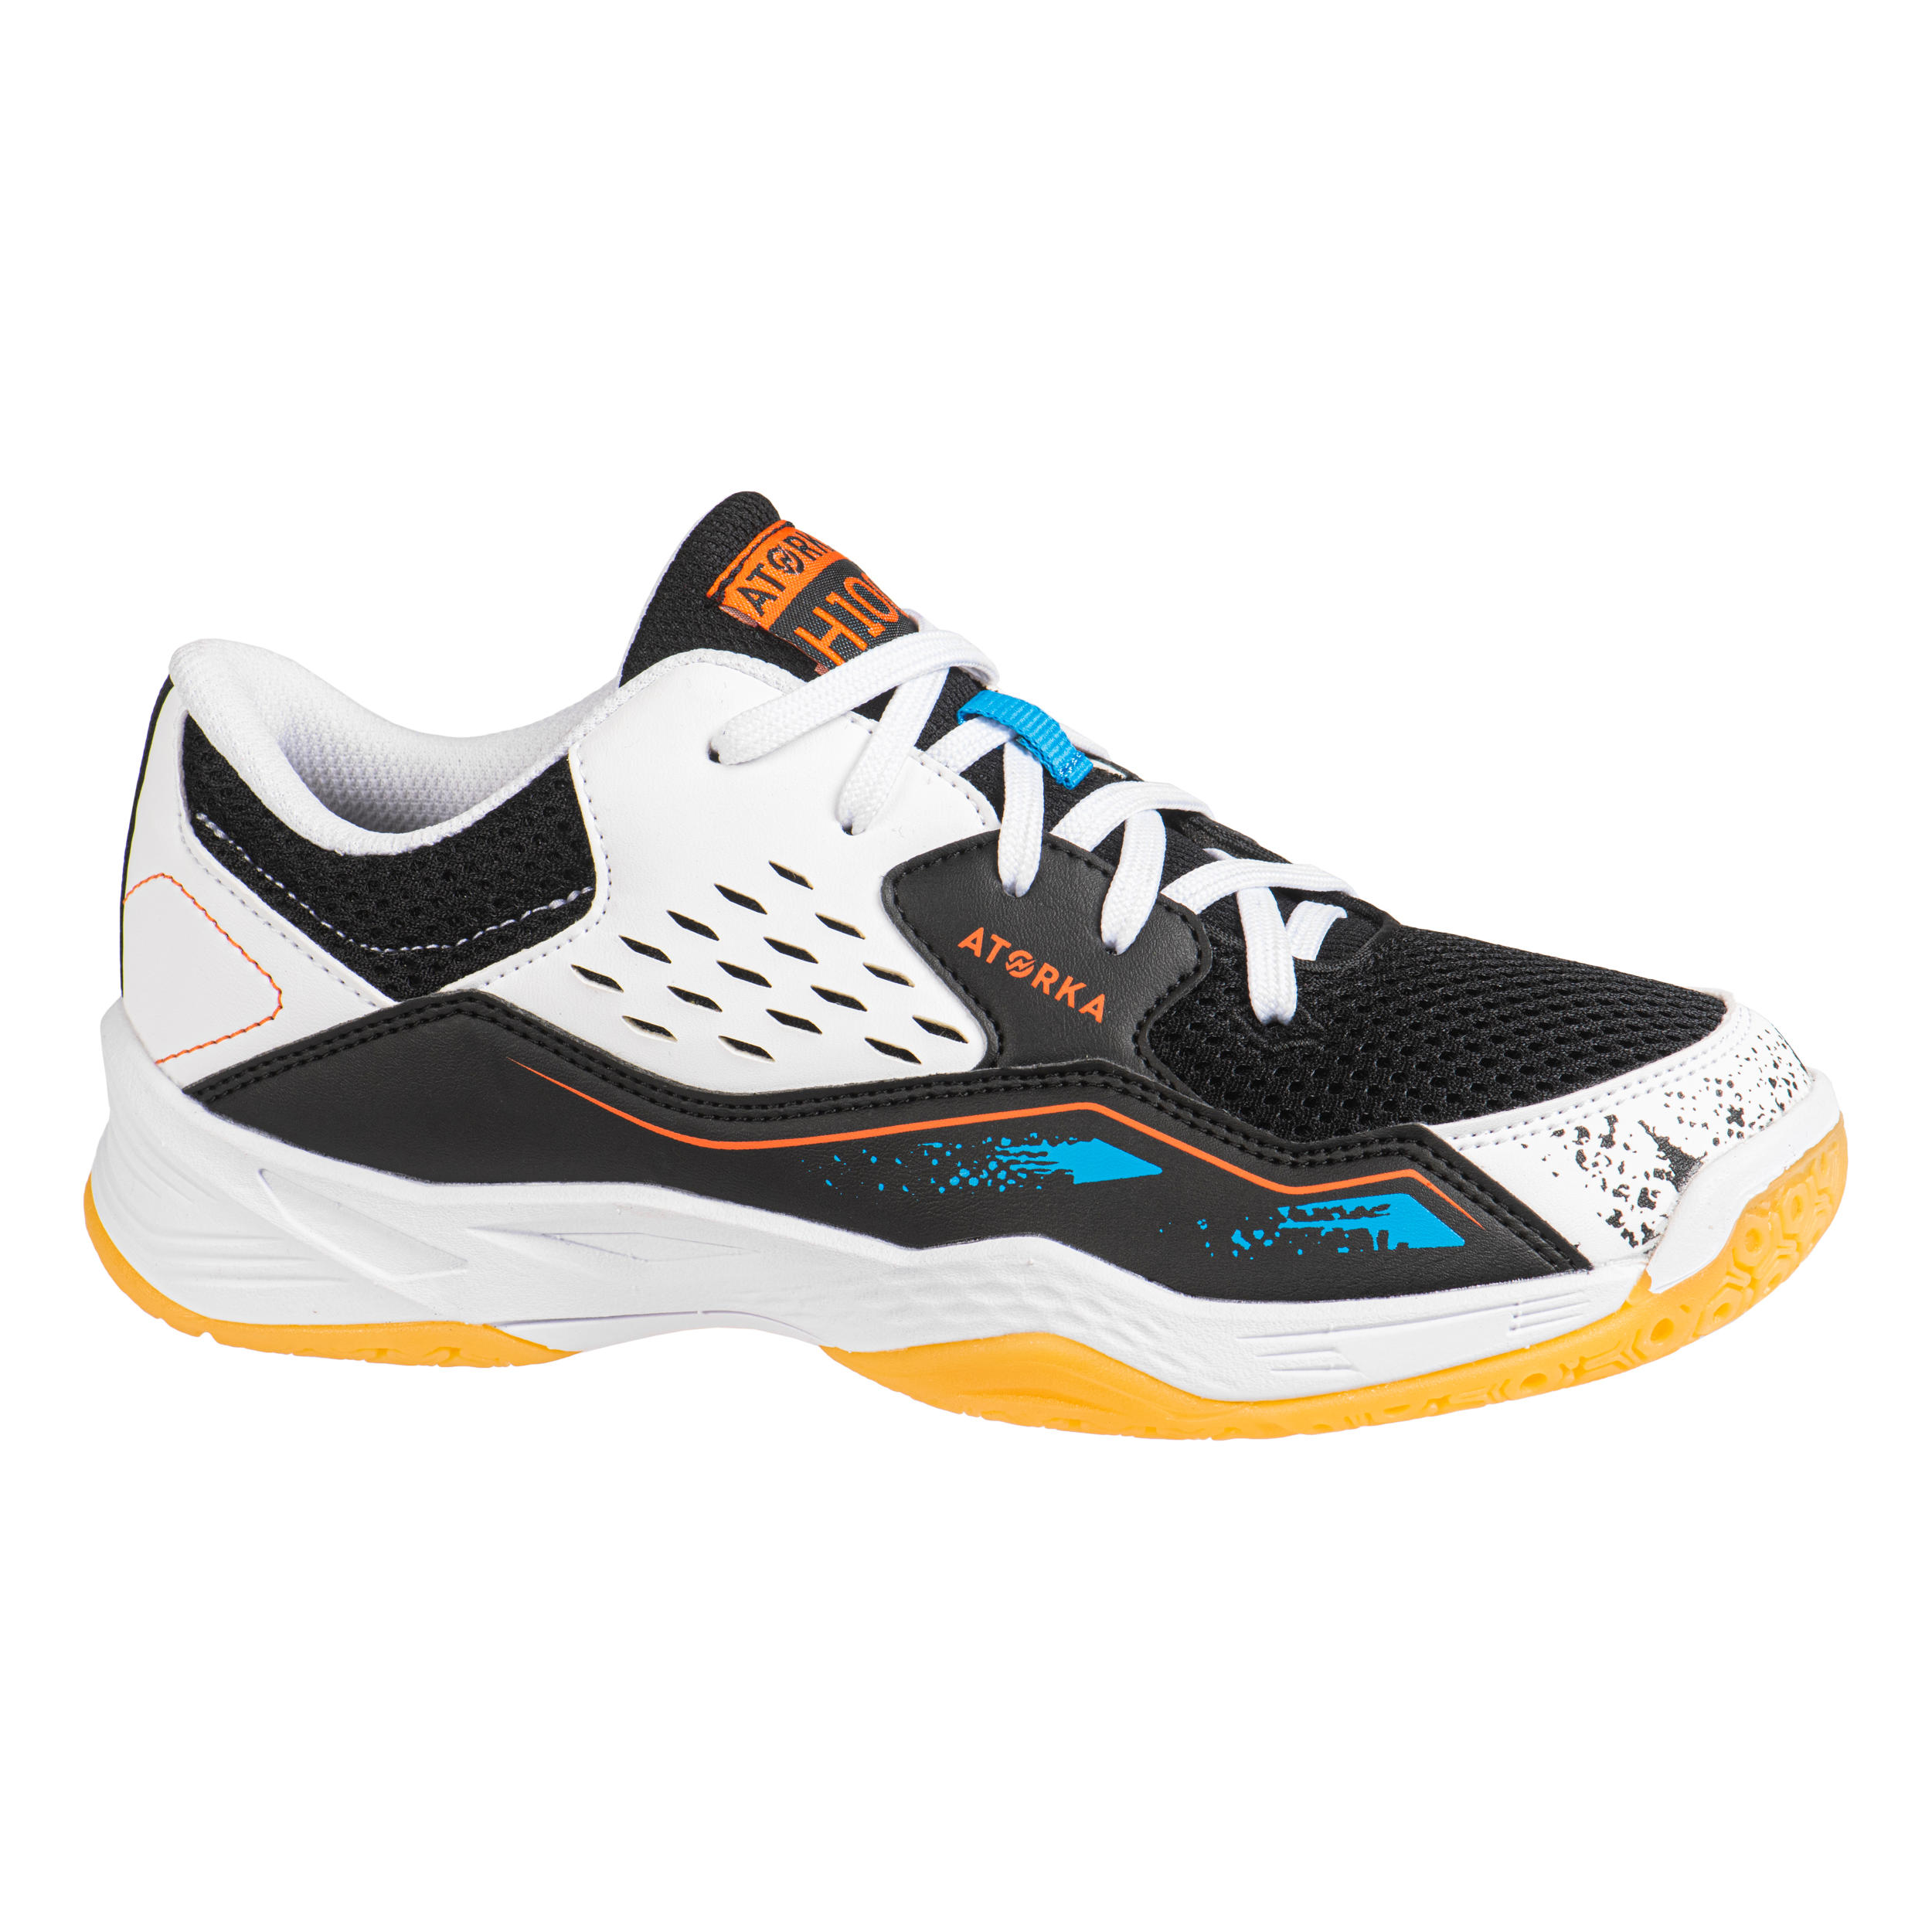 ATORKA Chaussures de handball enfant H100 avec lacets blanc/noir - ATORKA - 37